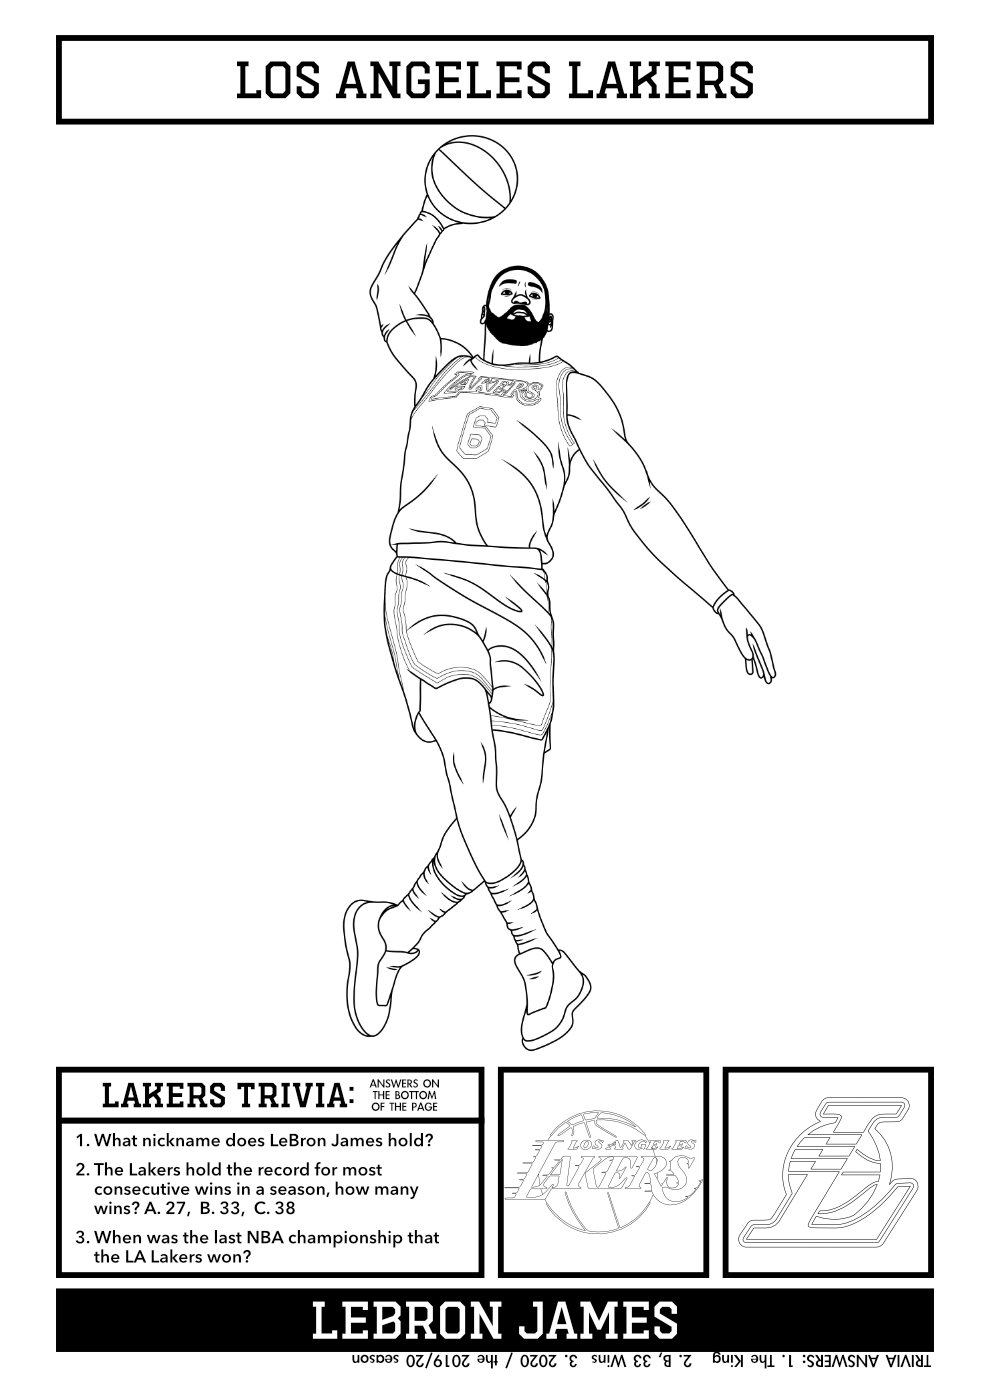 Hey guys i made a lebron james lakers activity sheet hope you like it rlakers